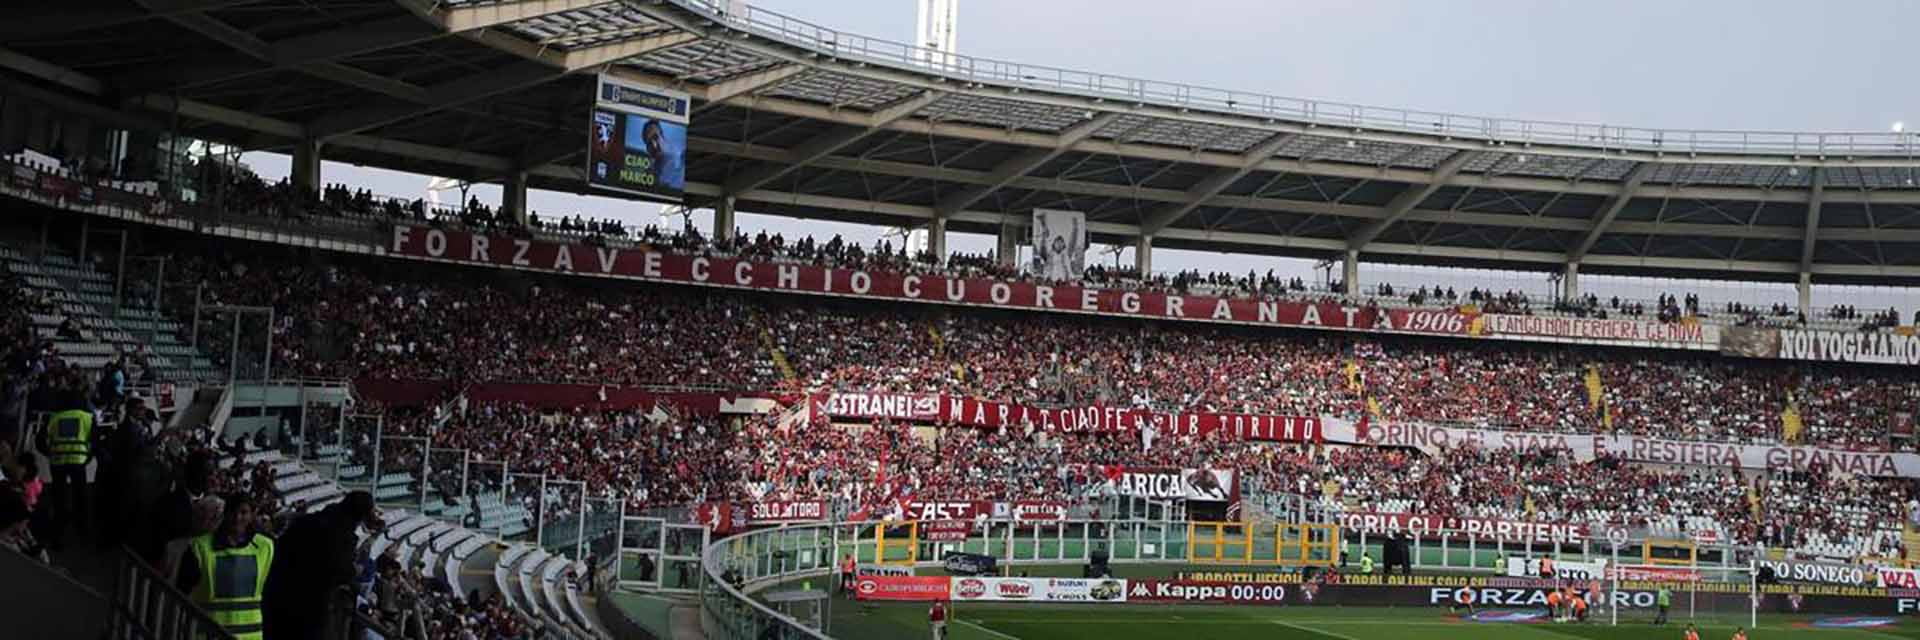 Torino FC - US Lecce, 1 septemberden 20:45